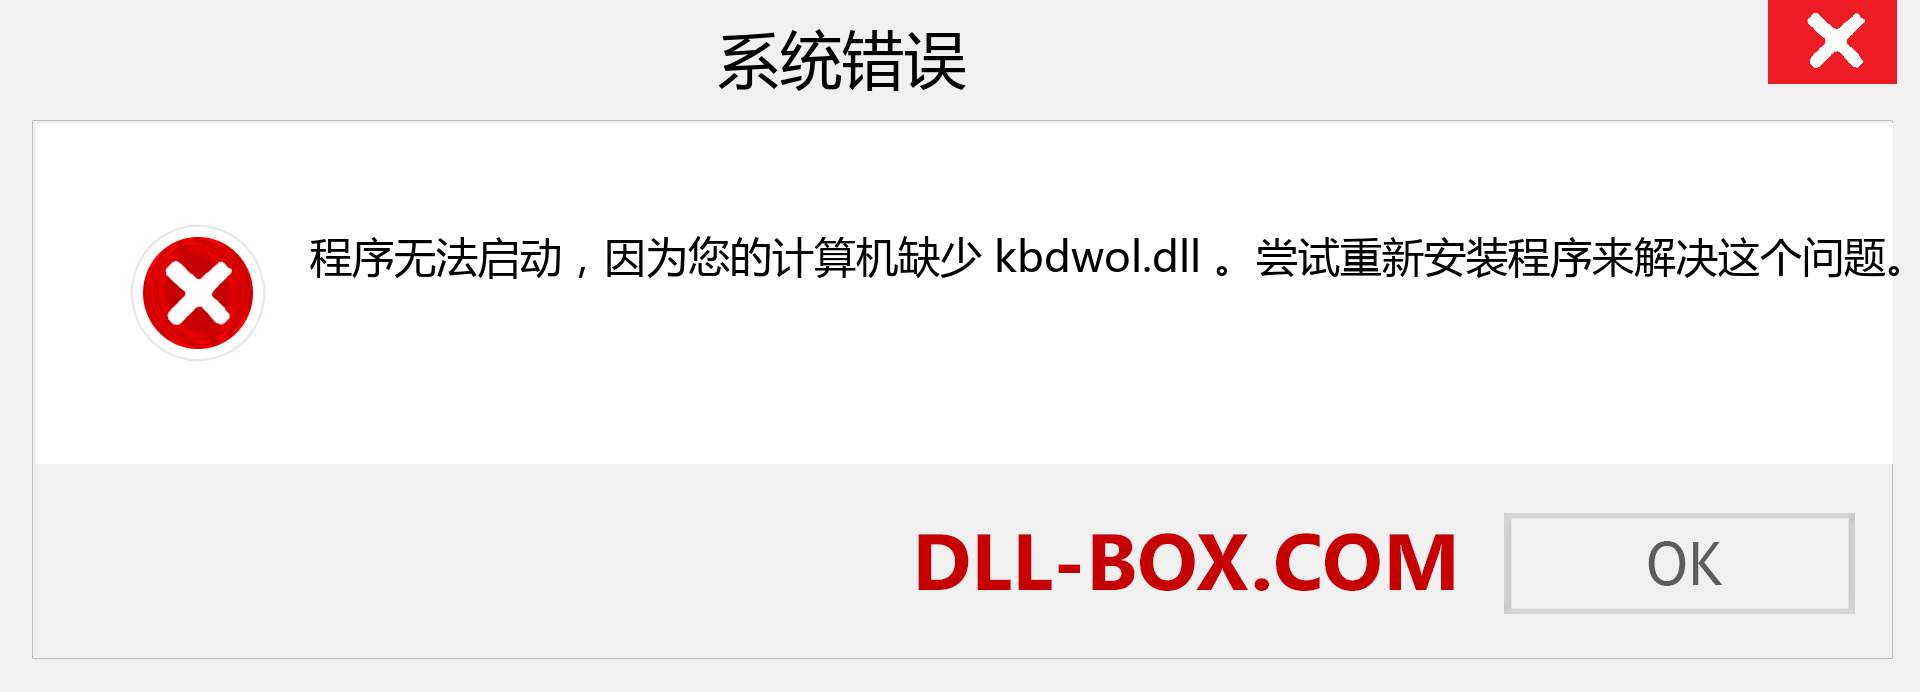 kbdwol.dll 文件丢失？。 适用于 Windows 7、8、10 的下载 - 修复 Windows、照片、图像上的 kbdwol dll 丢失错误